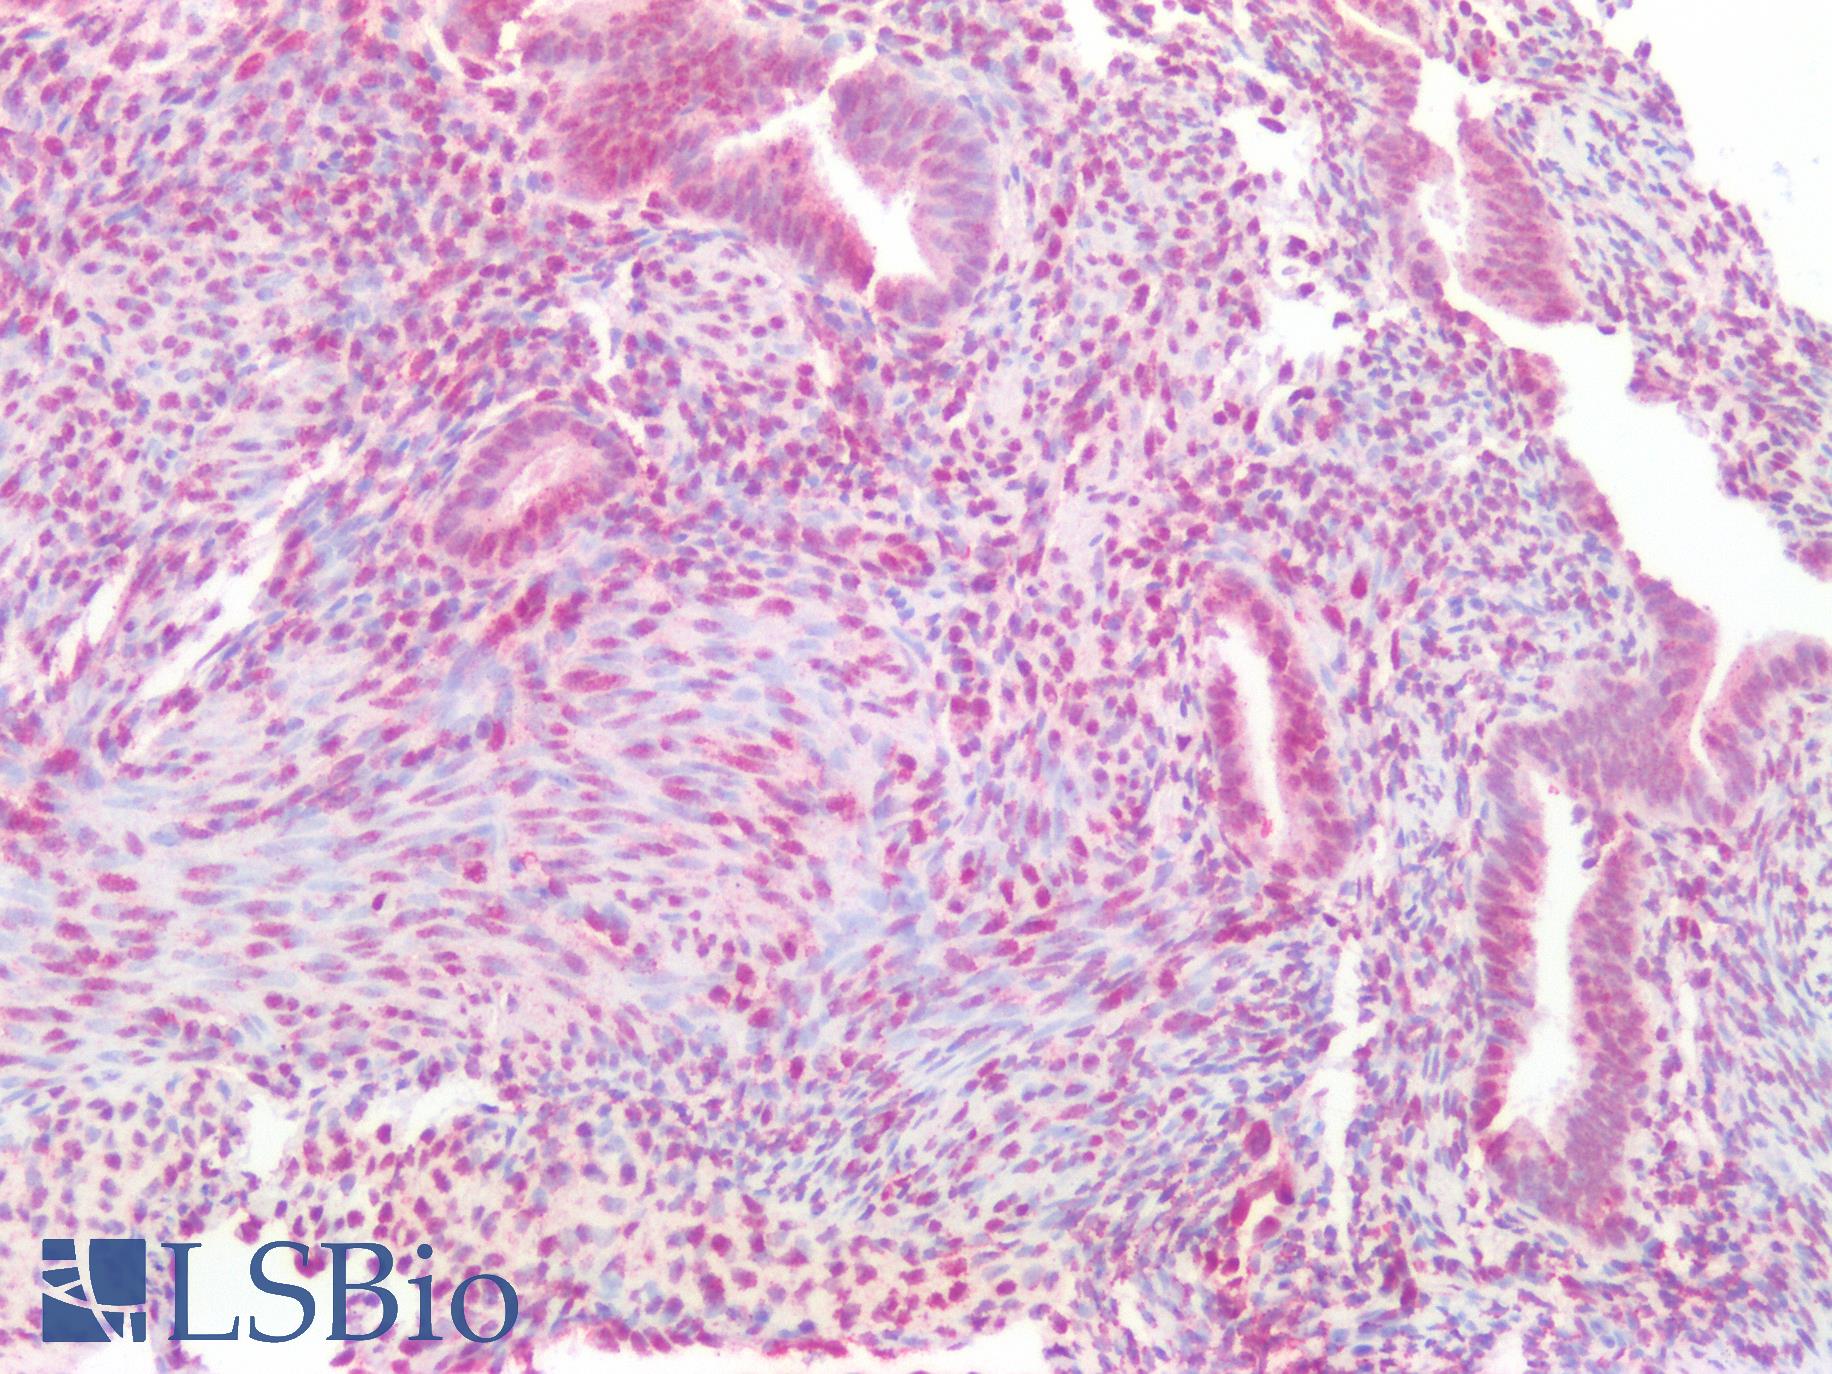 ERG Antibody - Human Uterus: Formalin-Fixed, Paraffin-Embedded (FFPE)